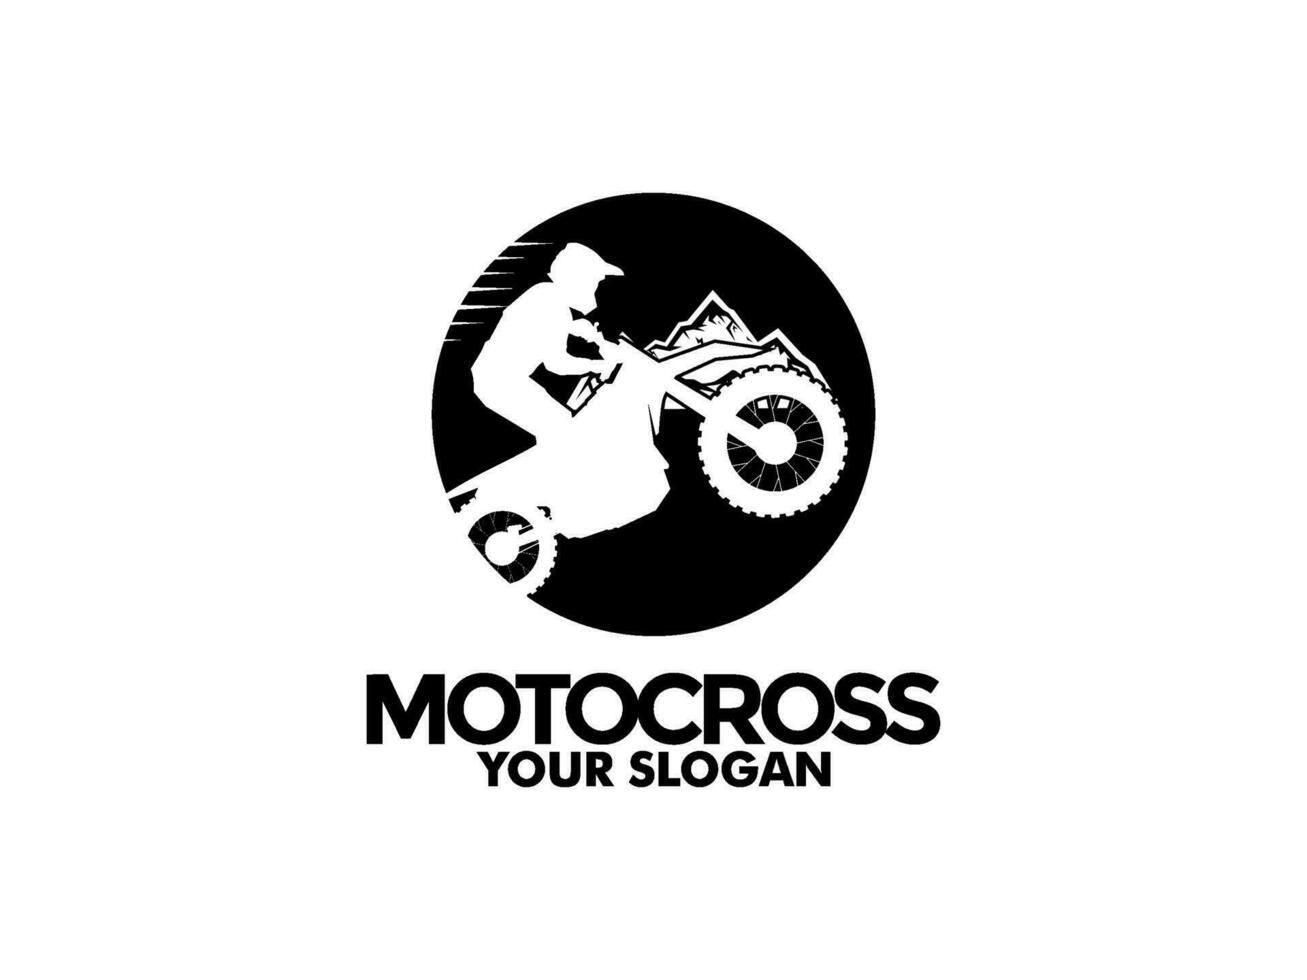 motocross with a rider on a motorbike, motocross logo vector illustration